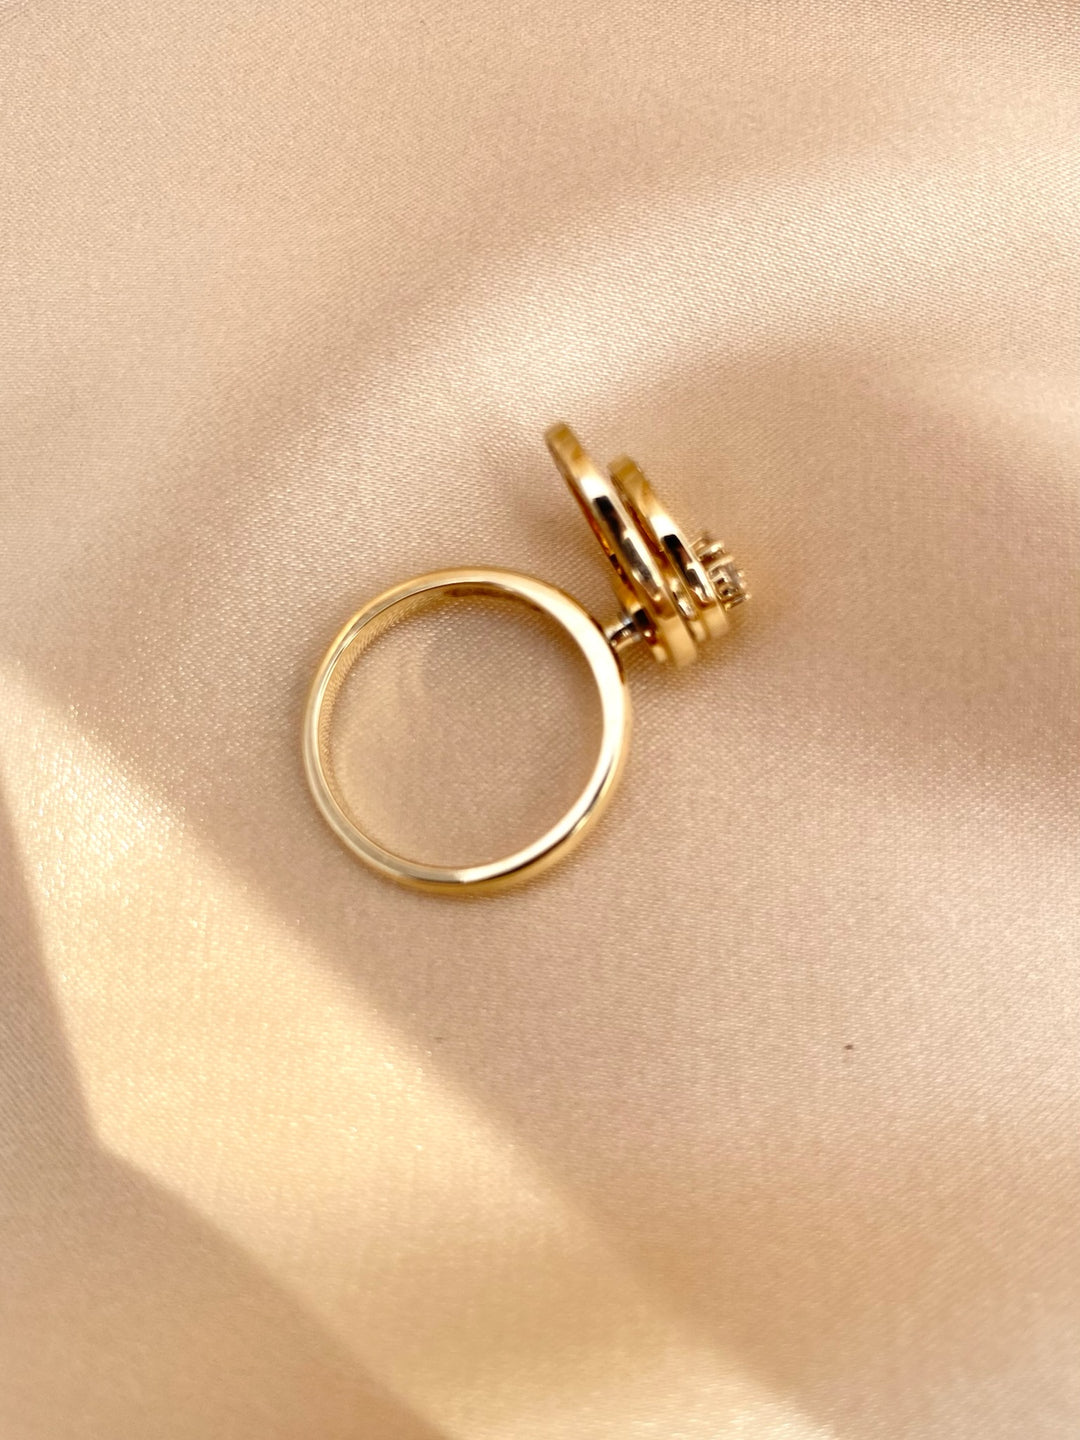 Original 1970's N. Teufel Motion Diamond Ring in 14k Gold